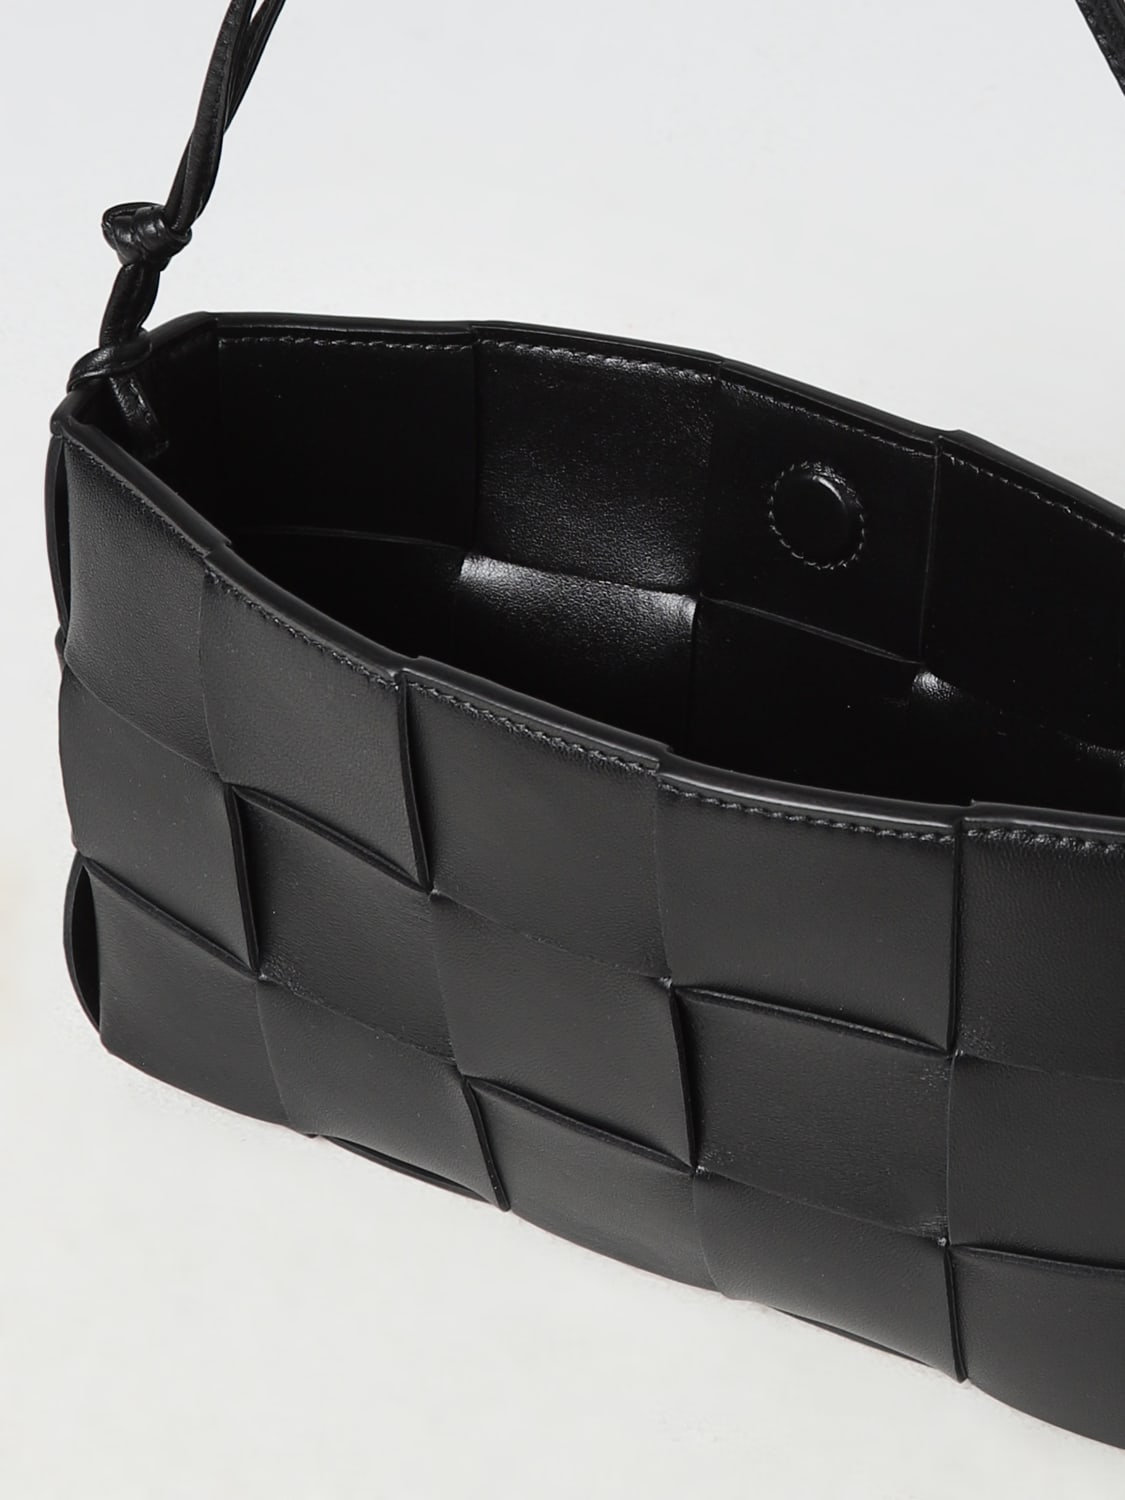 BOTTEGA VENETA: Cassette intreccio leather bag - Black | Bottega Veneta ...